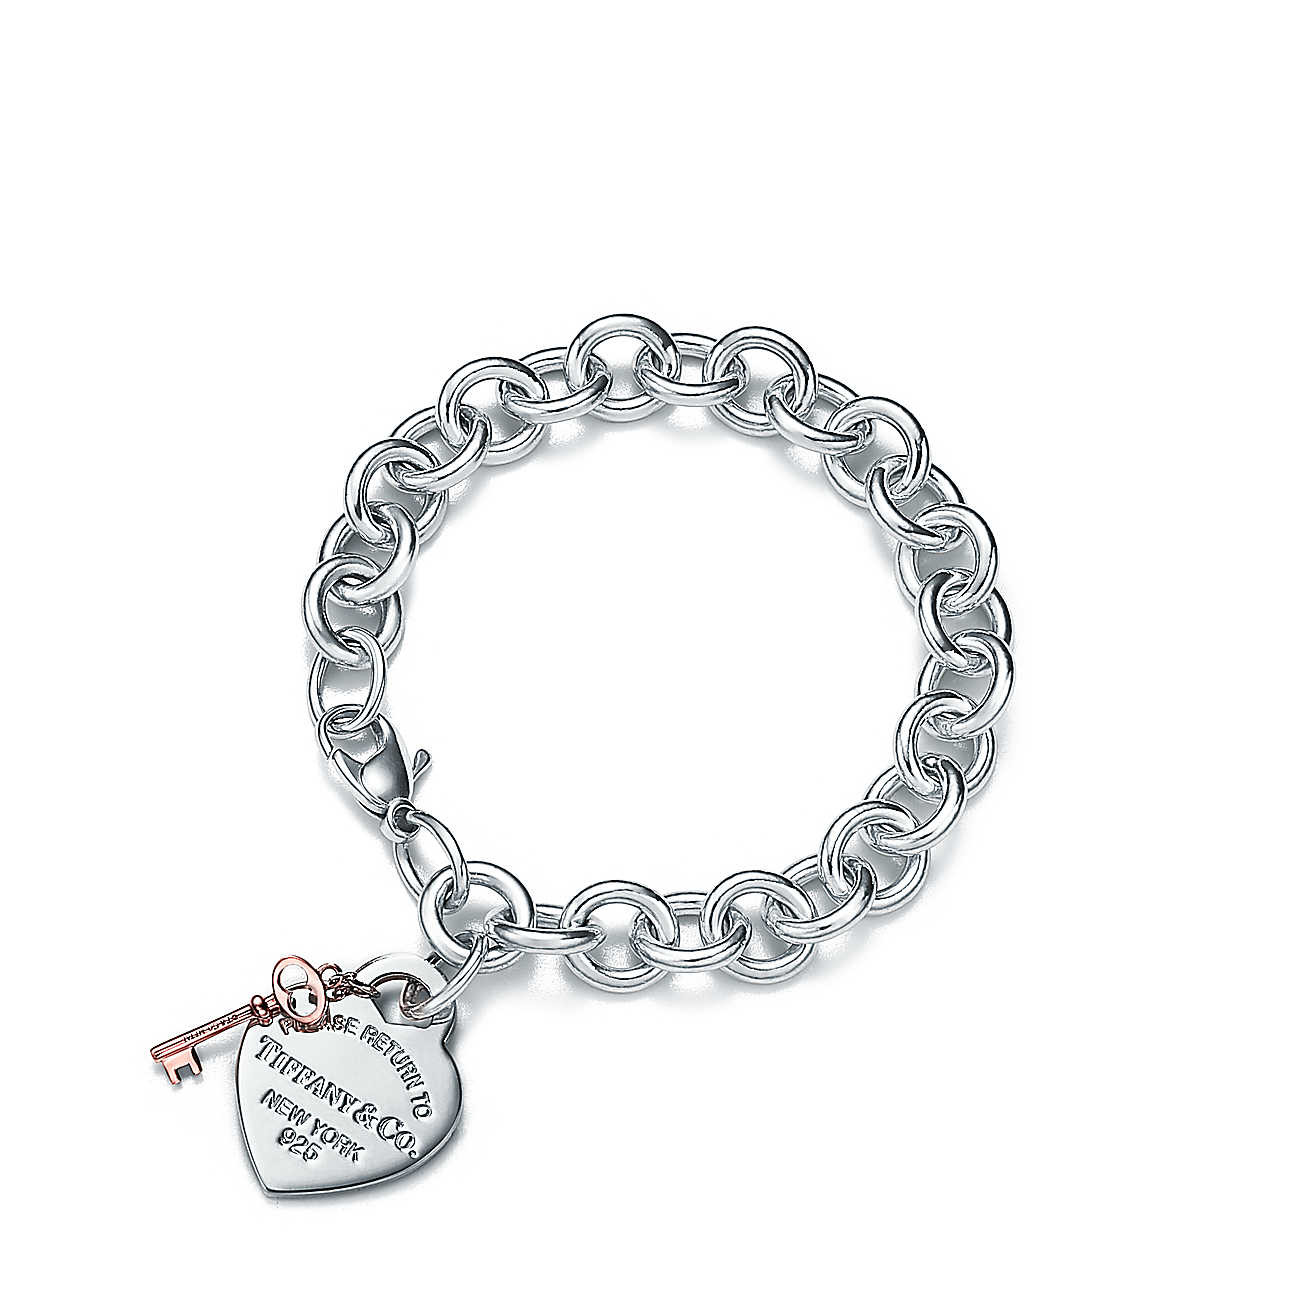 Tiffany And Co Heart Bracelet
 Return to Tiffany heart tag key bracelet in sterling